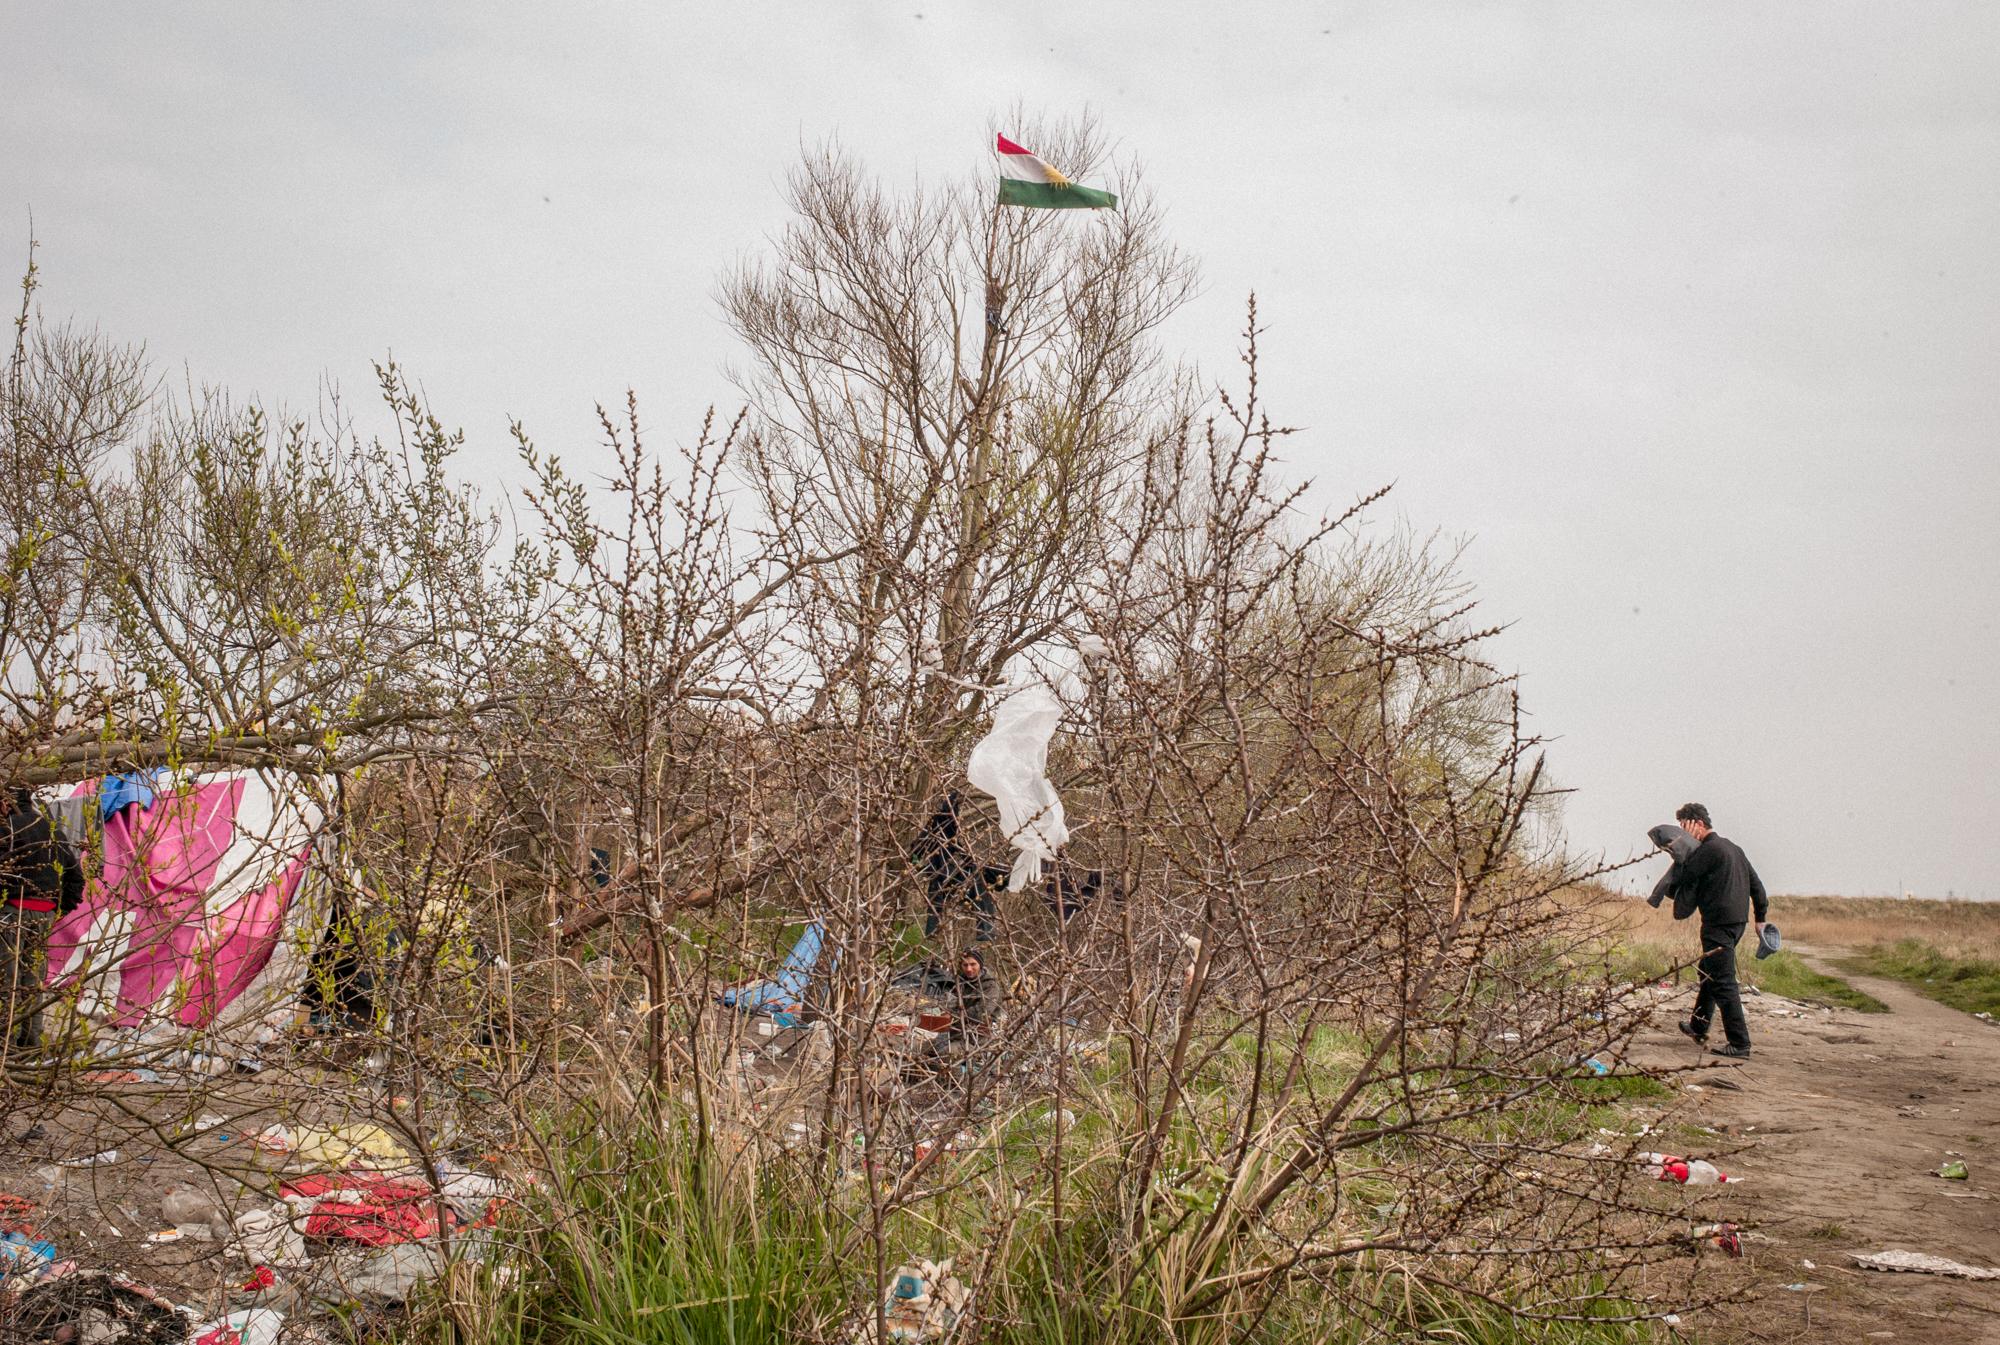 Migrants in Calais, France (2008) - Kurdish immigrants raise Kurdish flag over camp, while...